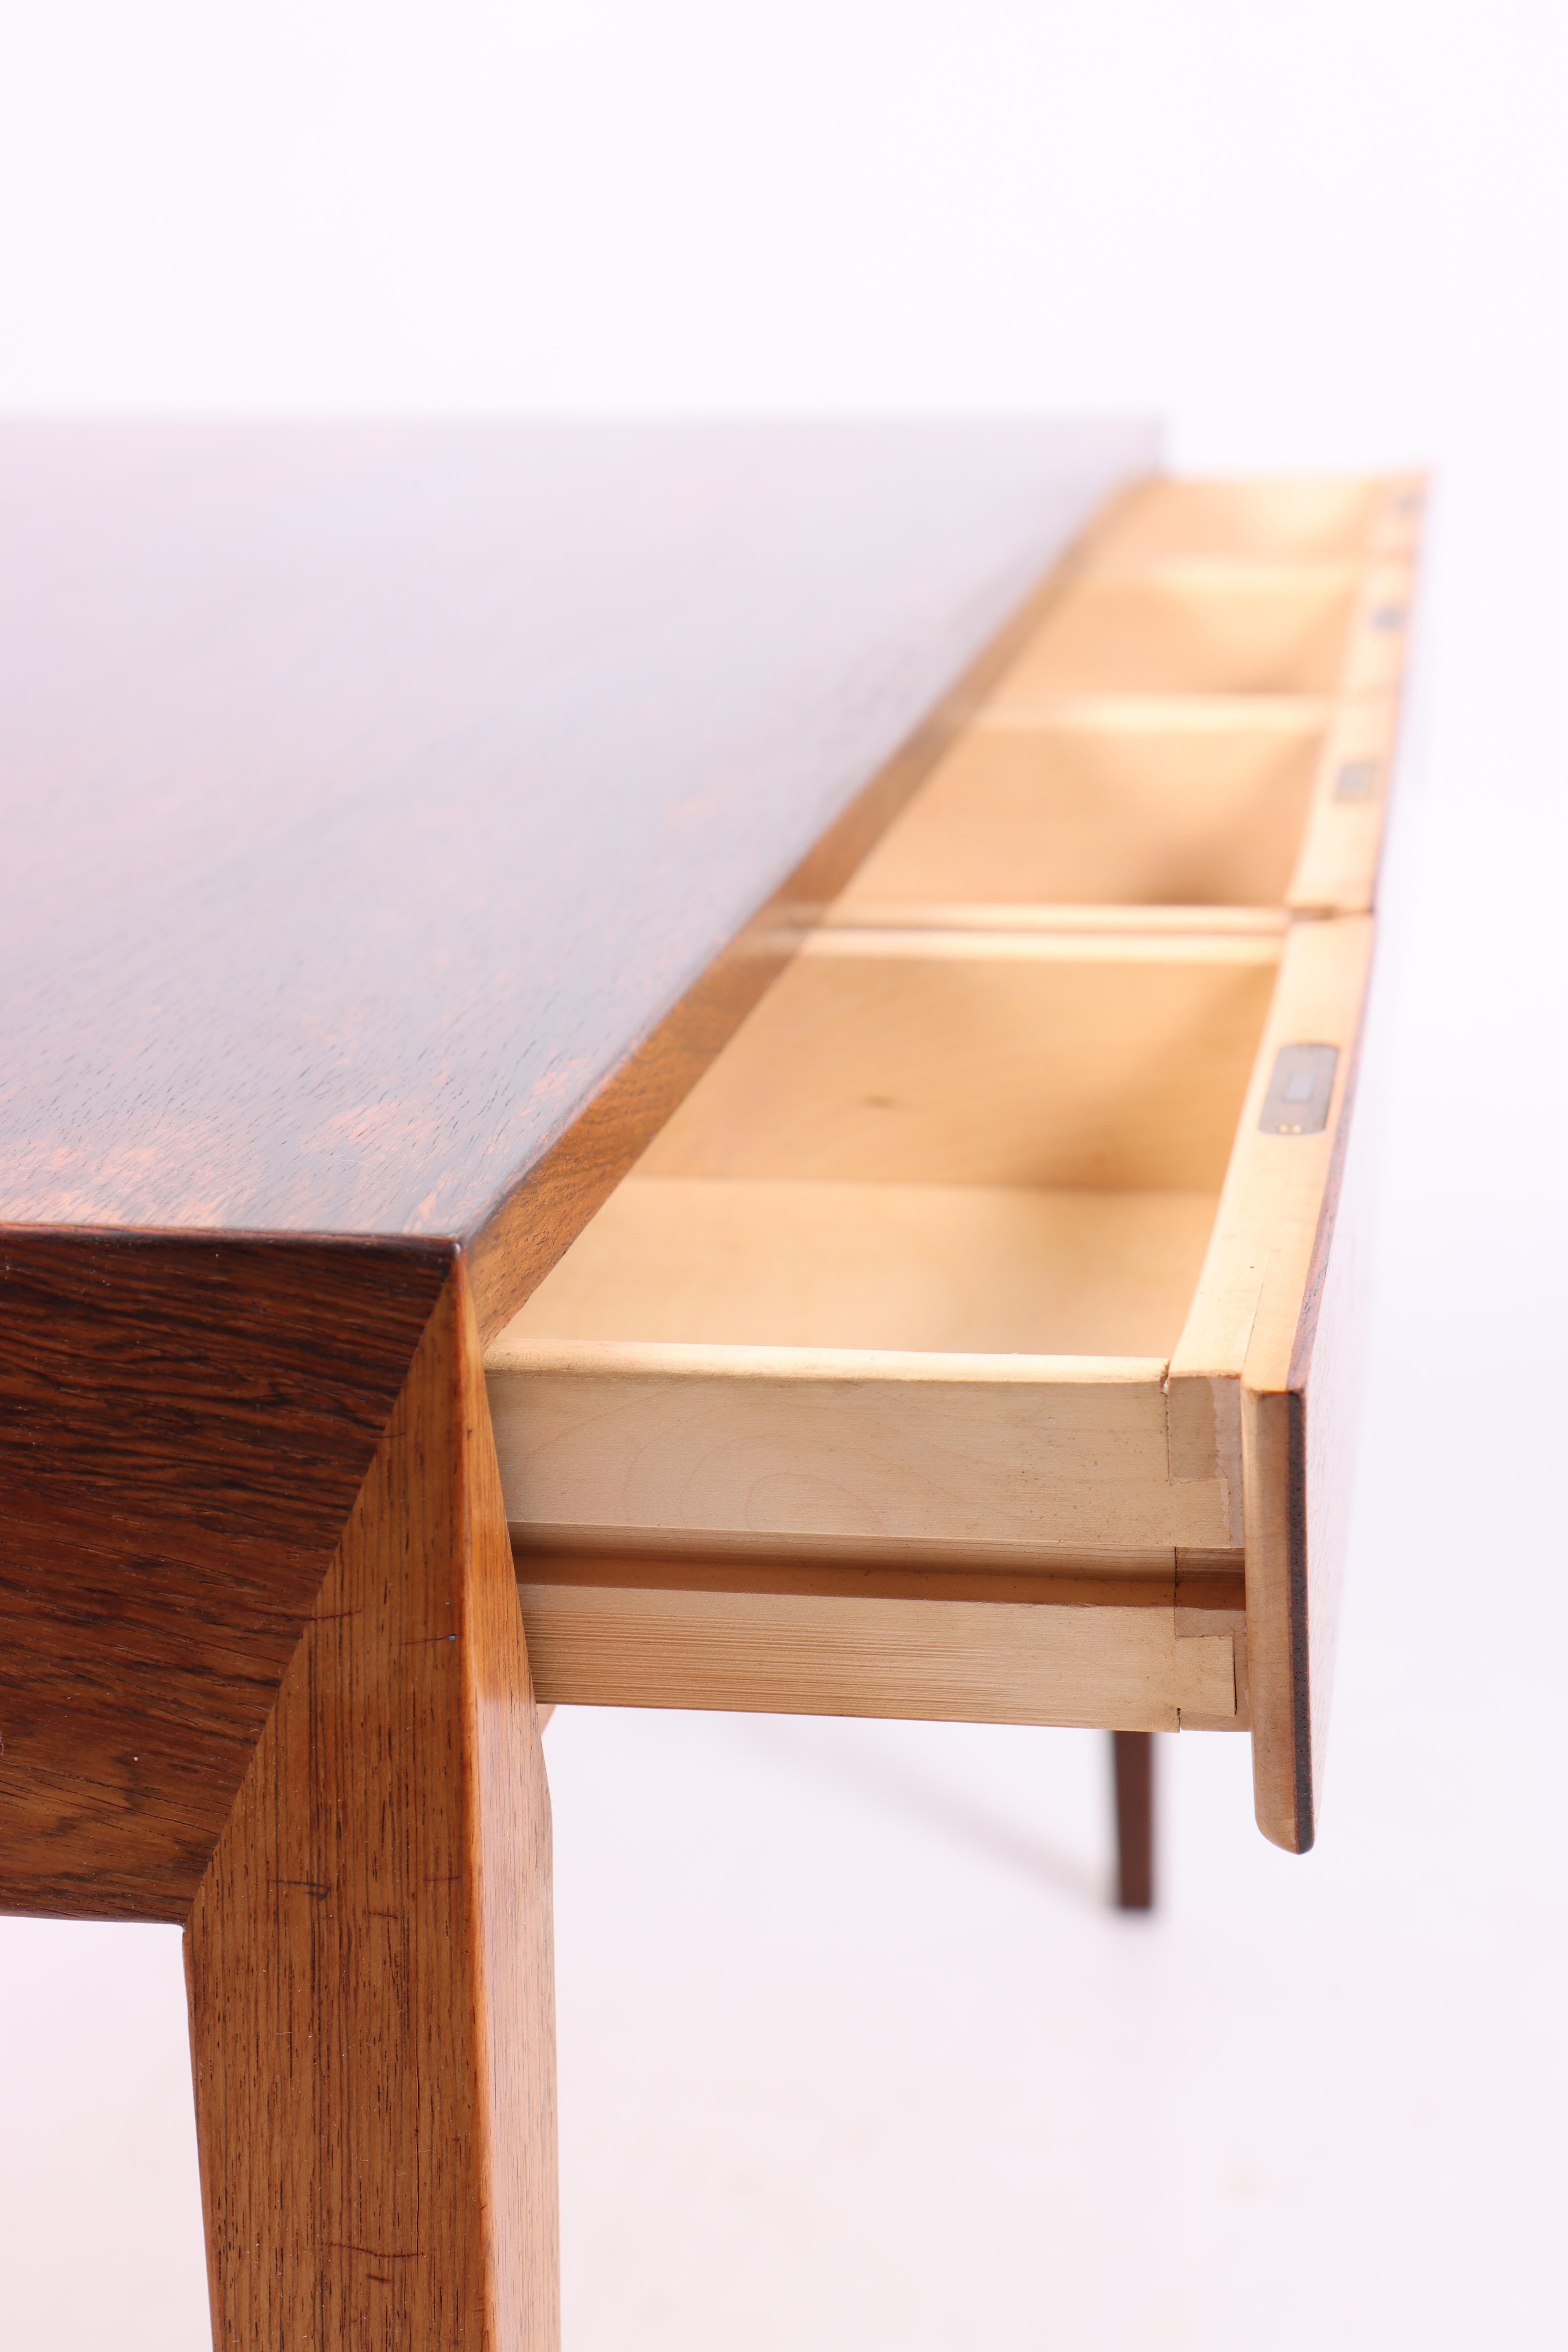 Rosewood Elegant Mid-Century Desk Designed by Severin Hansen Jr. 1950s